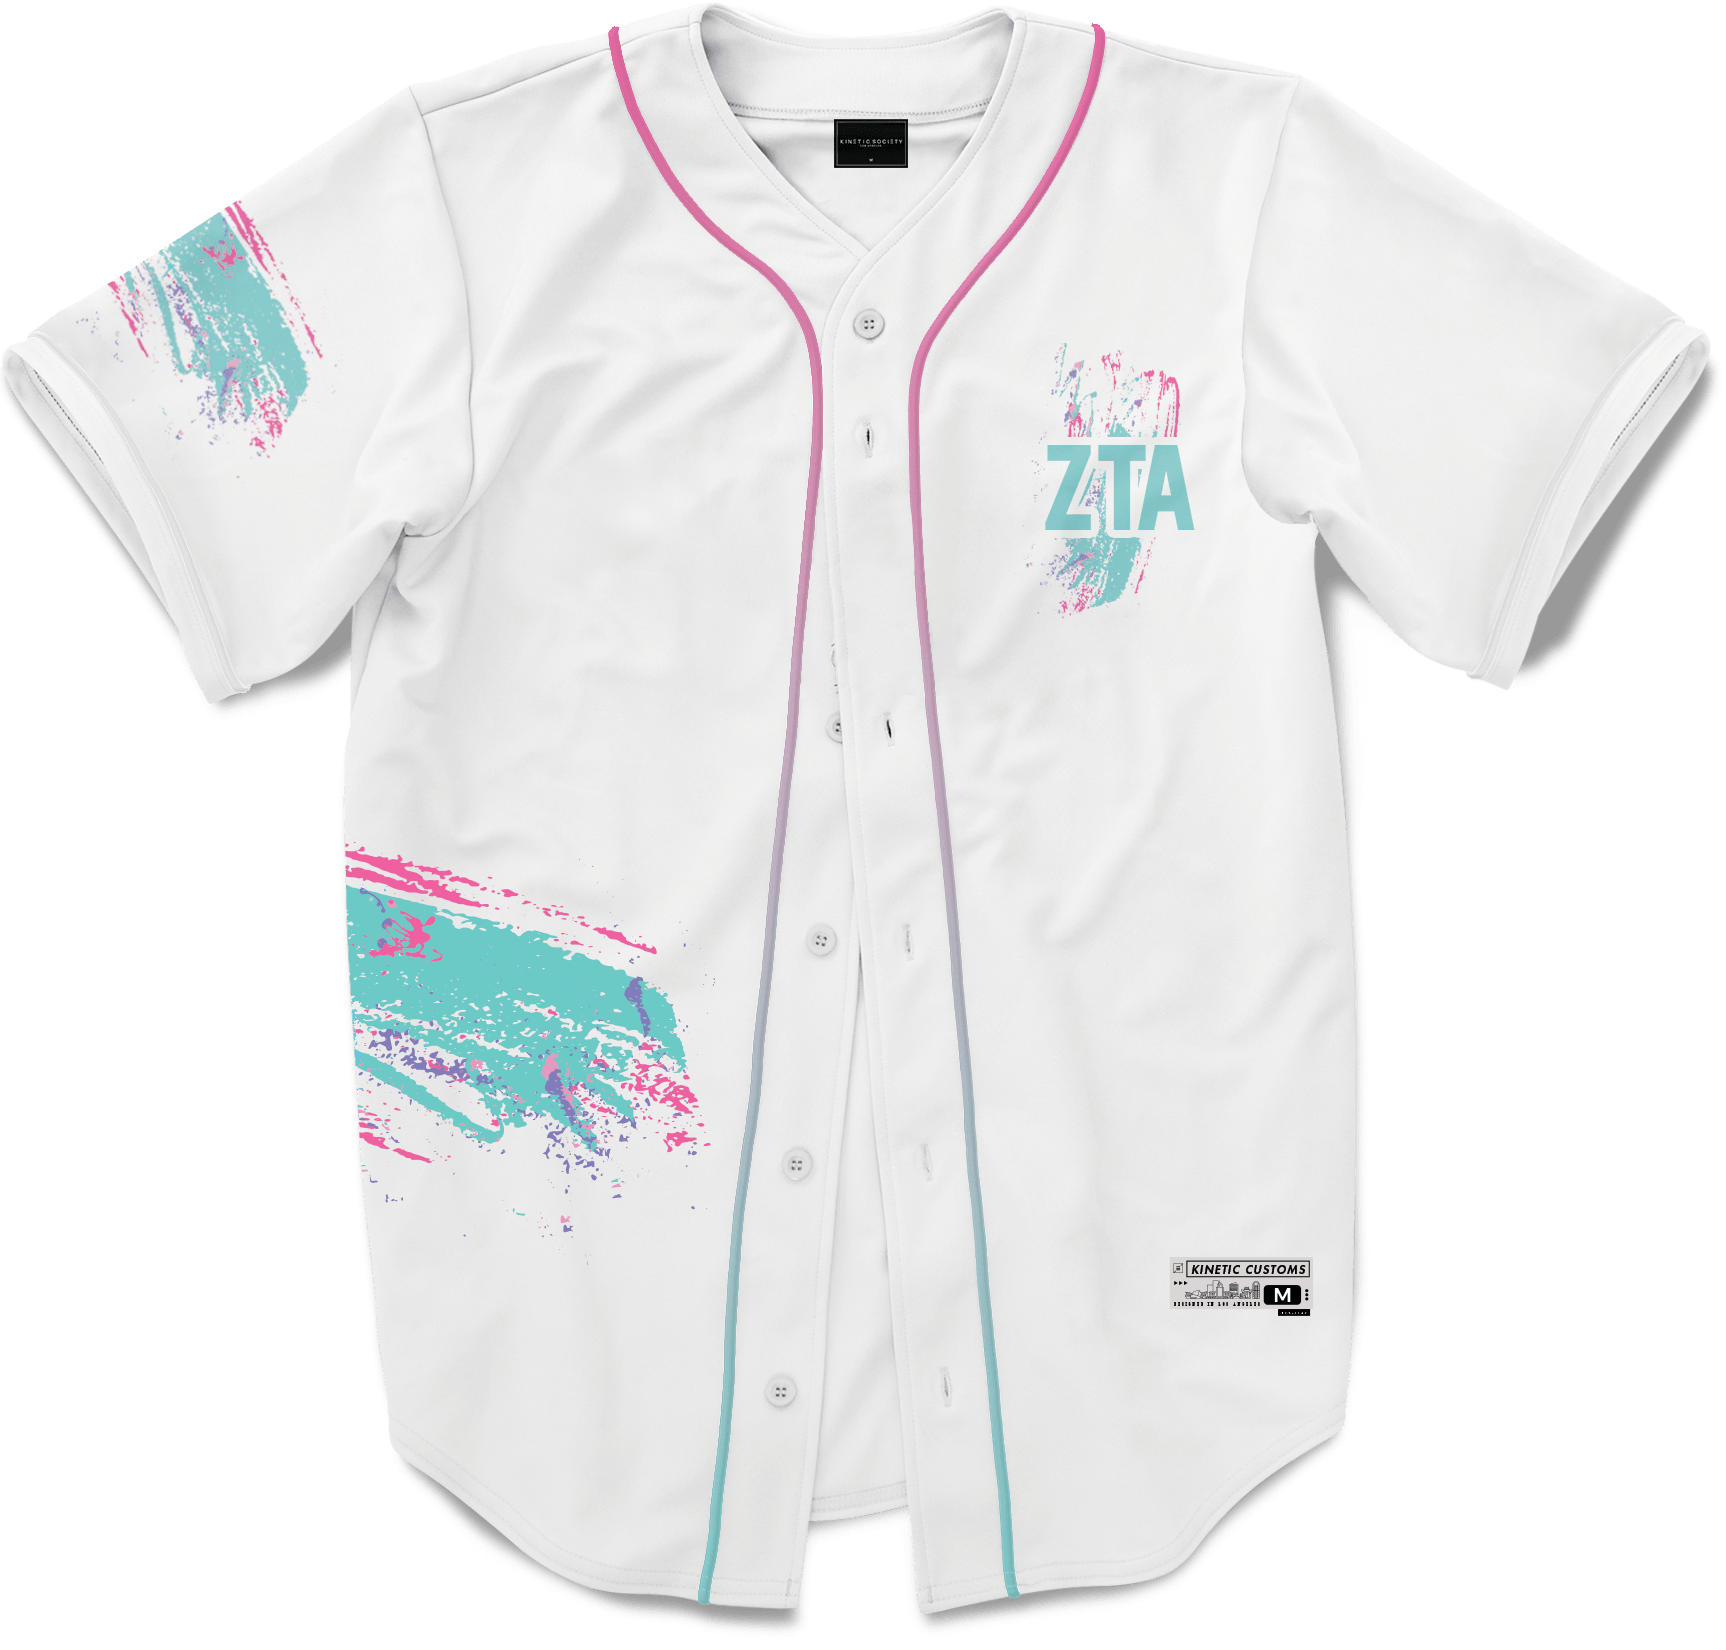 Zeta Tau Alpha - White Miami Beach Splash Baseball Jersey